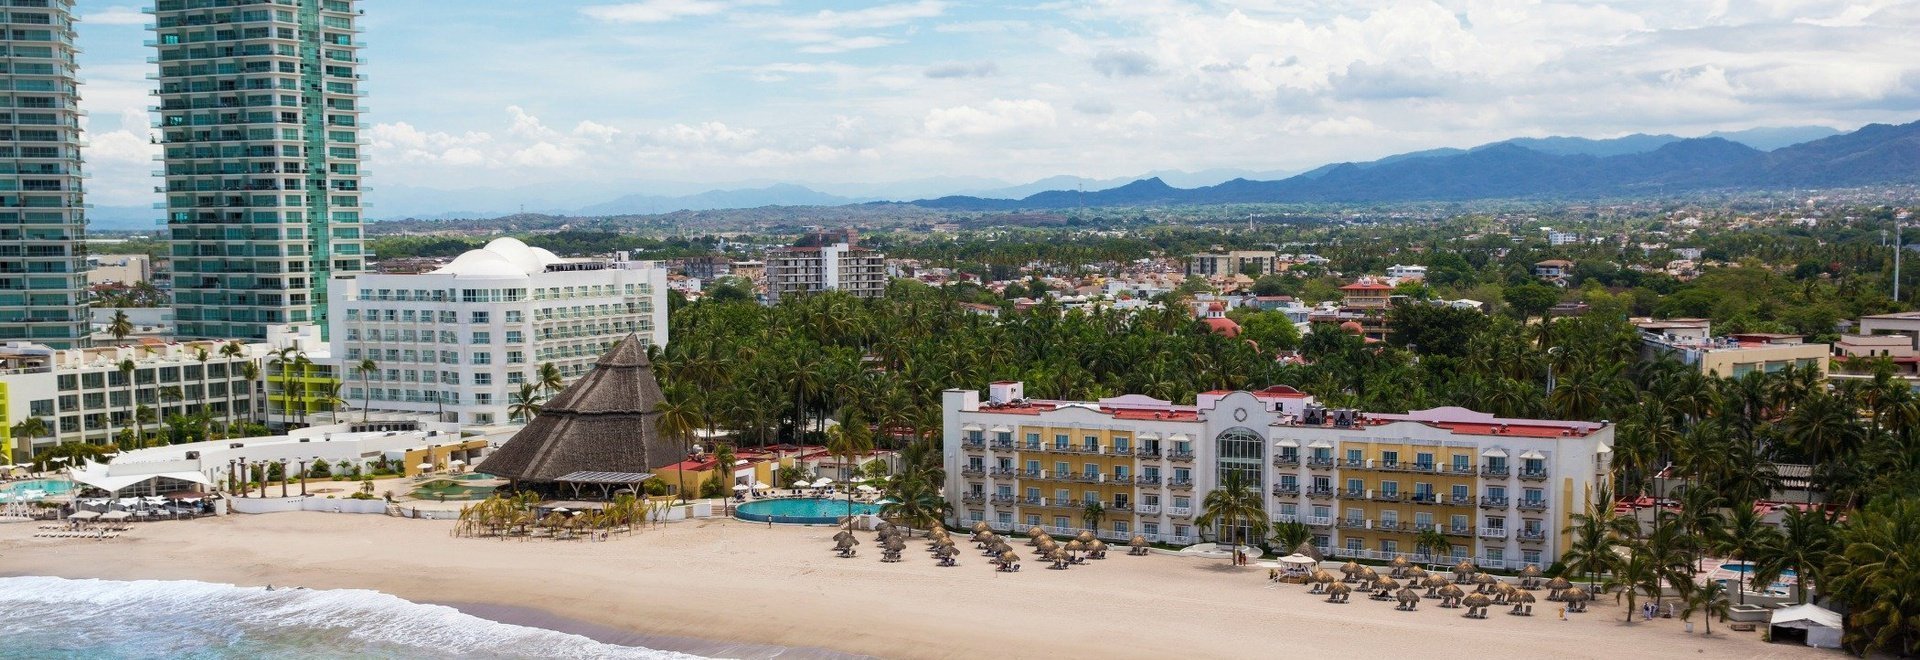 Hotel Krystal Puerto Vallarta - Encantadores paisajes